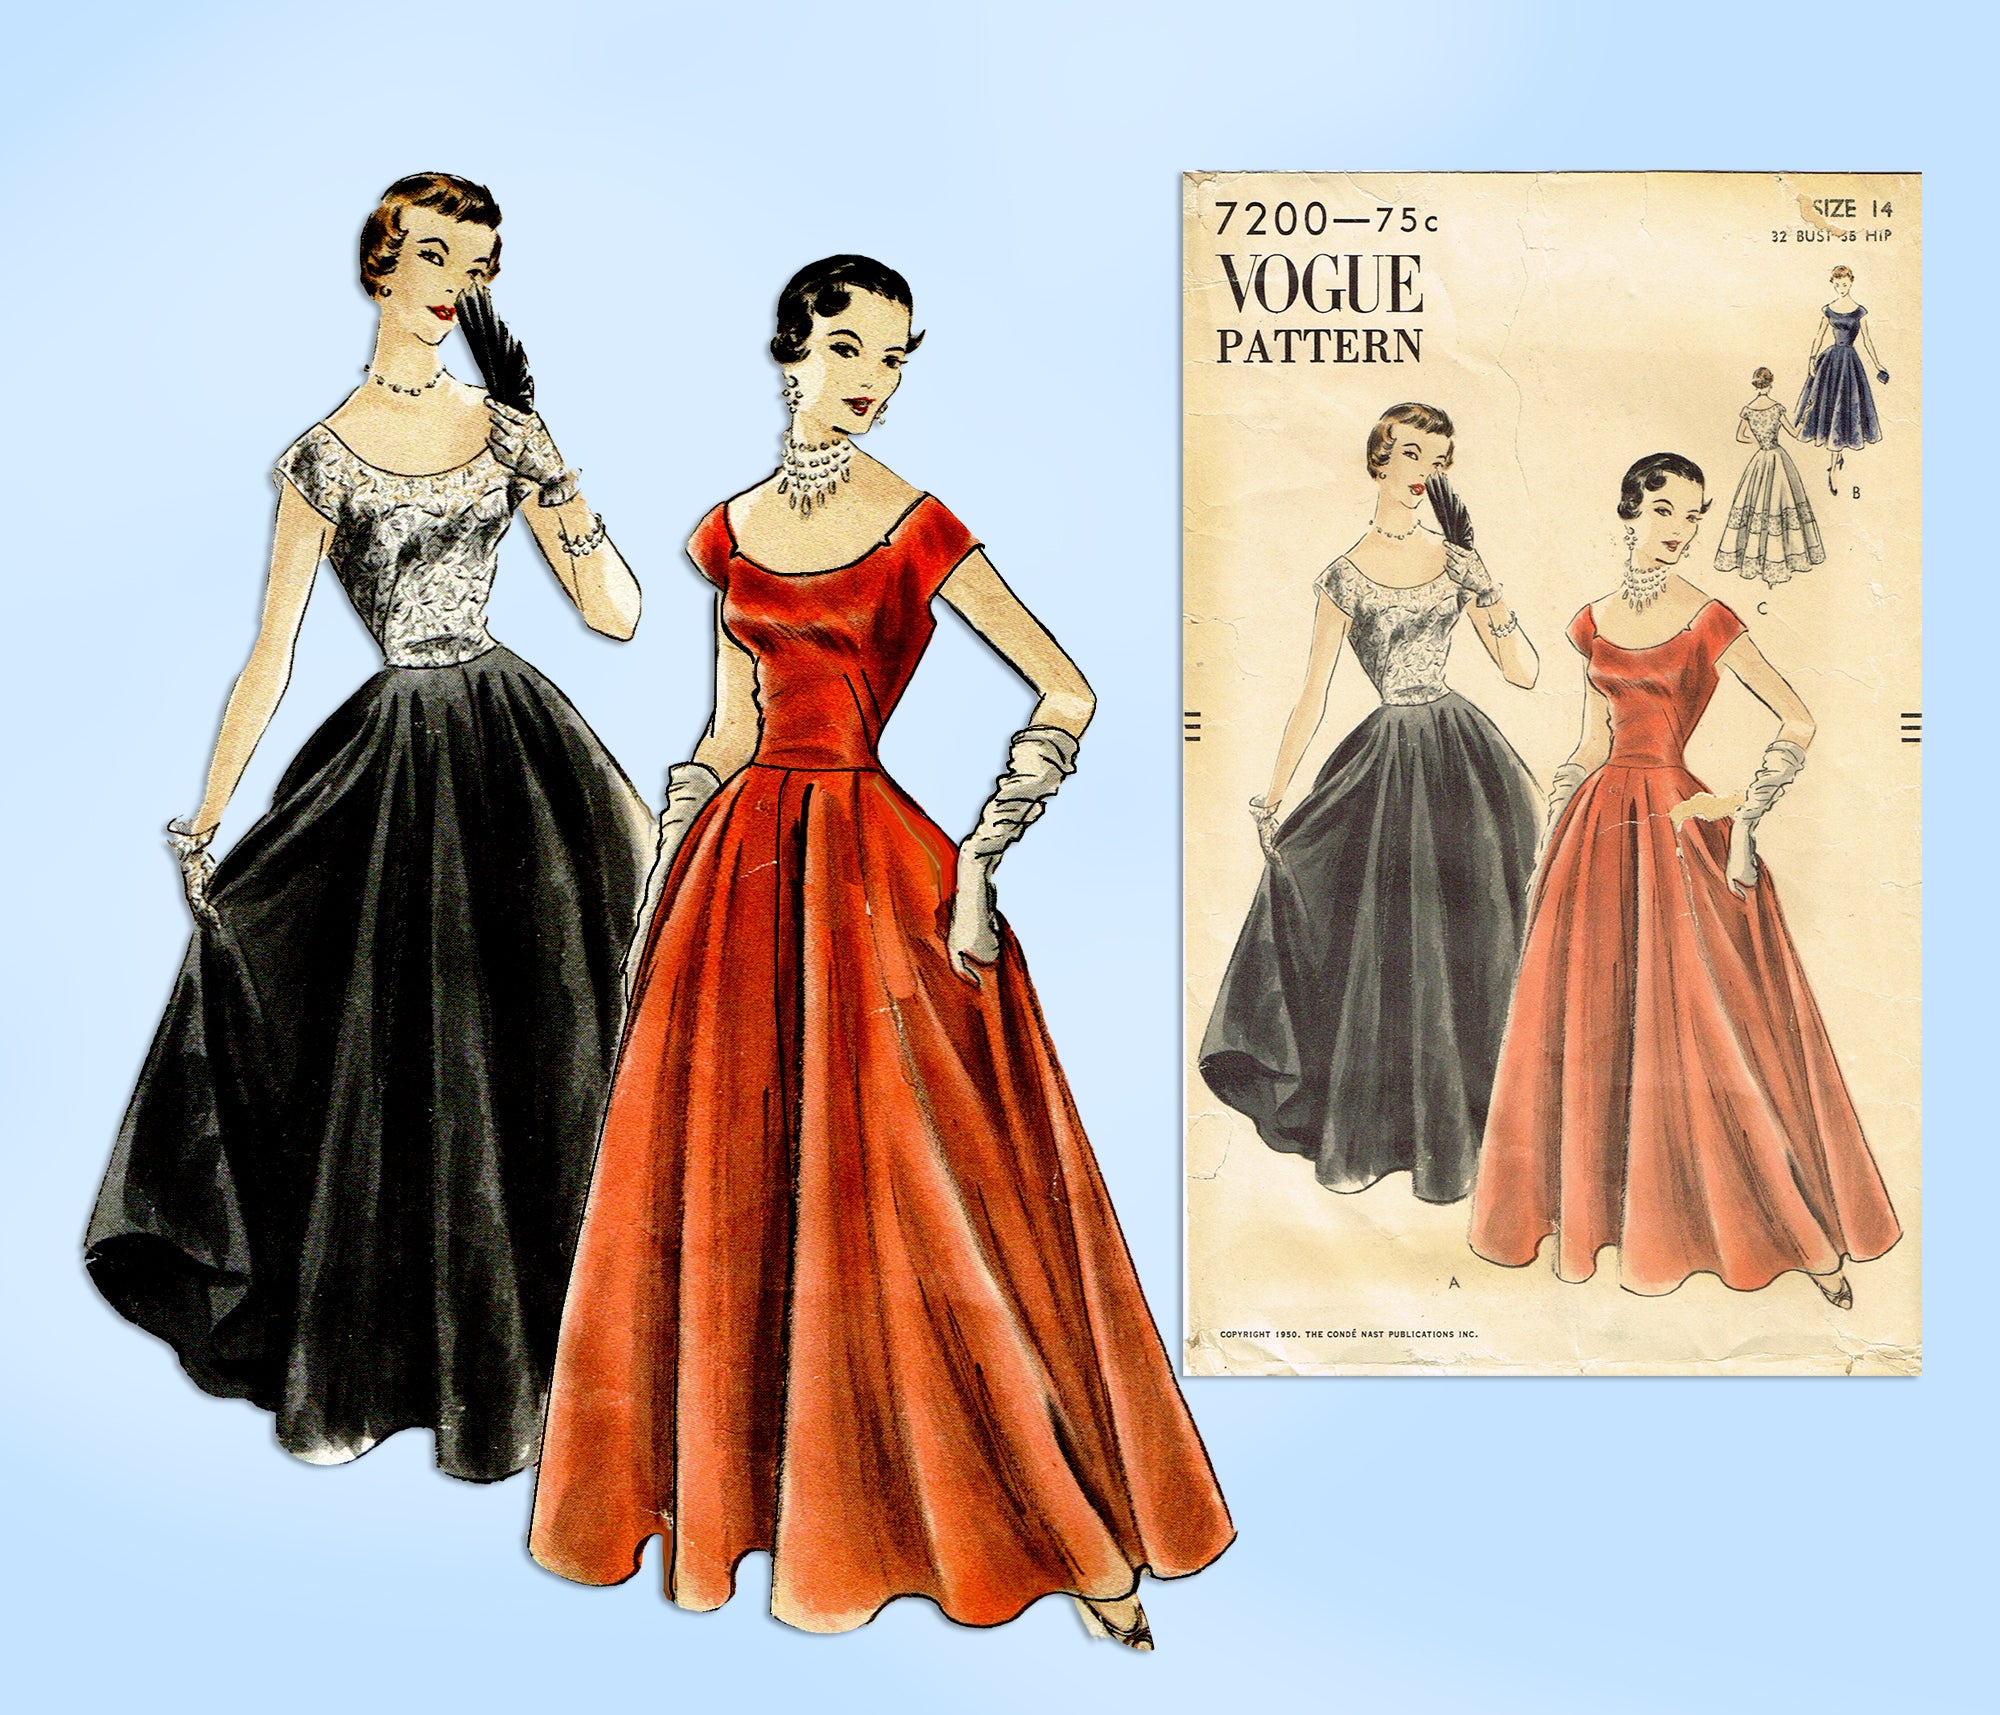 ORIGINAL Vintage Sewing Pattern 1950s Ladies Evening Cocktail Gown Vogue  9180 Size 34 Bust